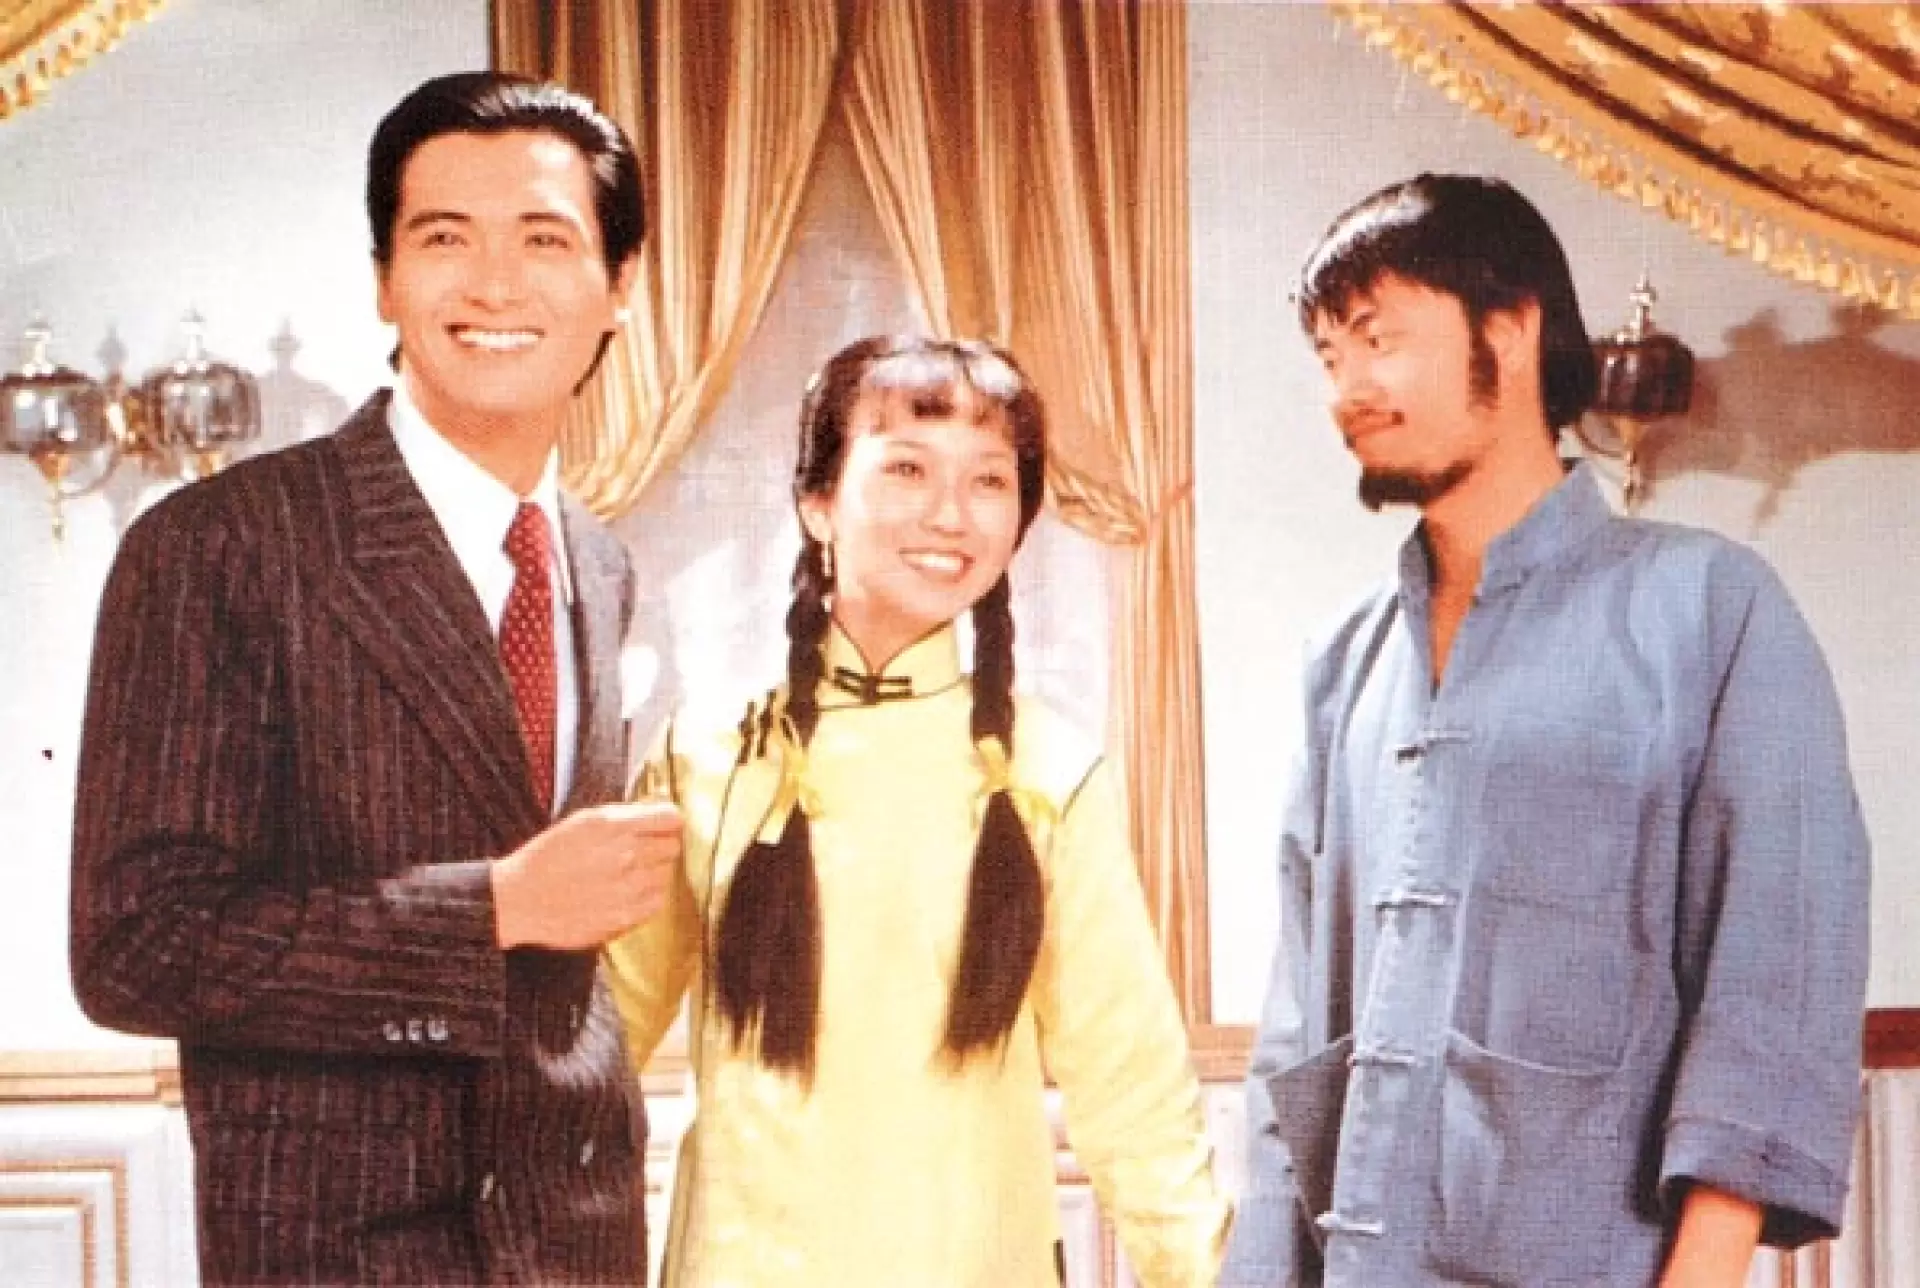 دانلود فیلم Shang hai tan 1983